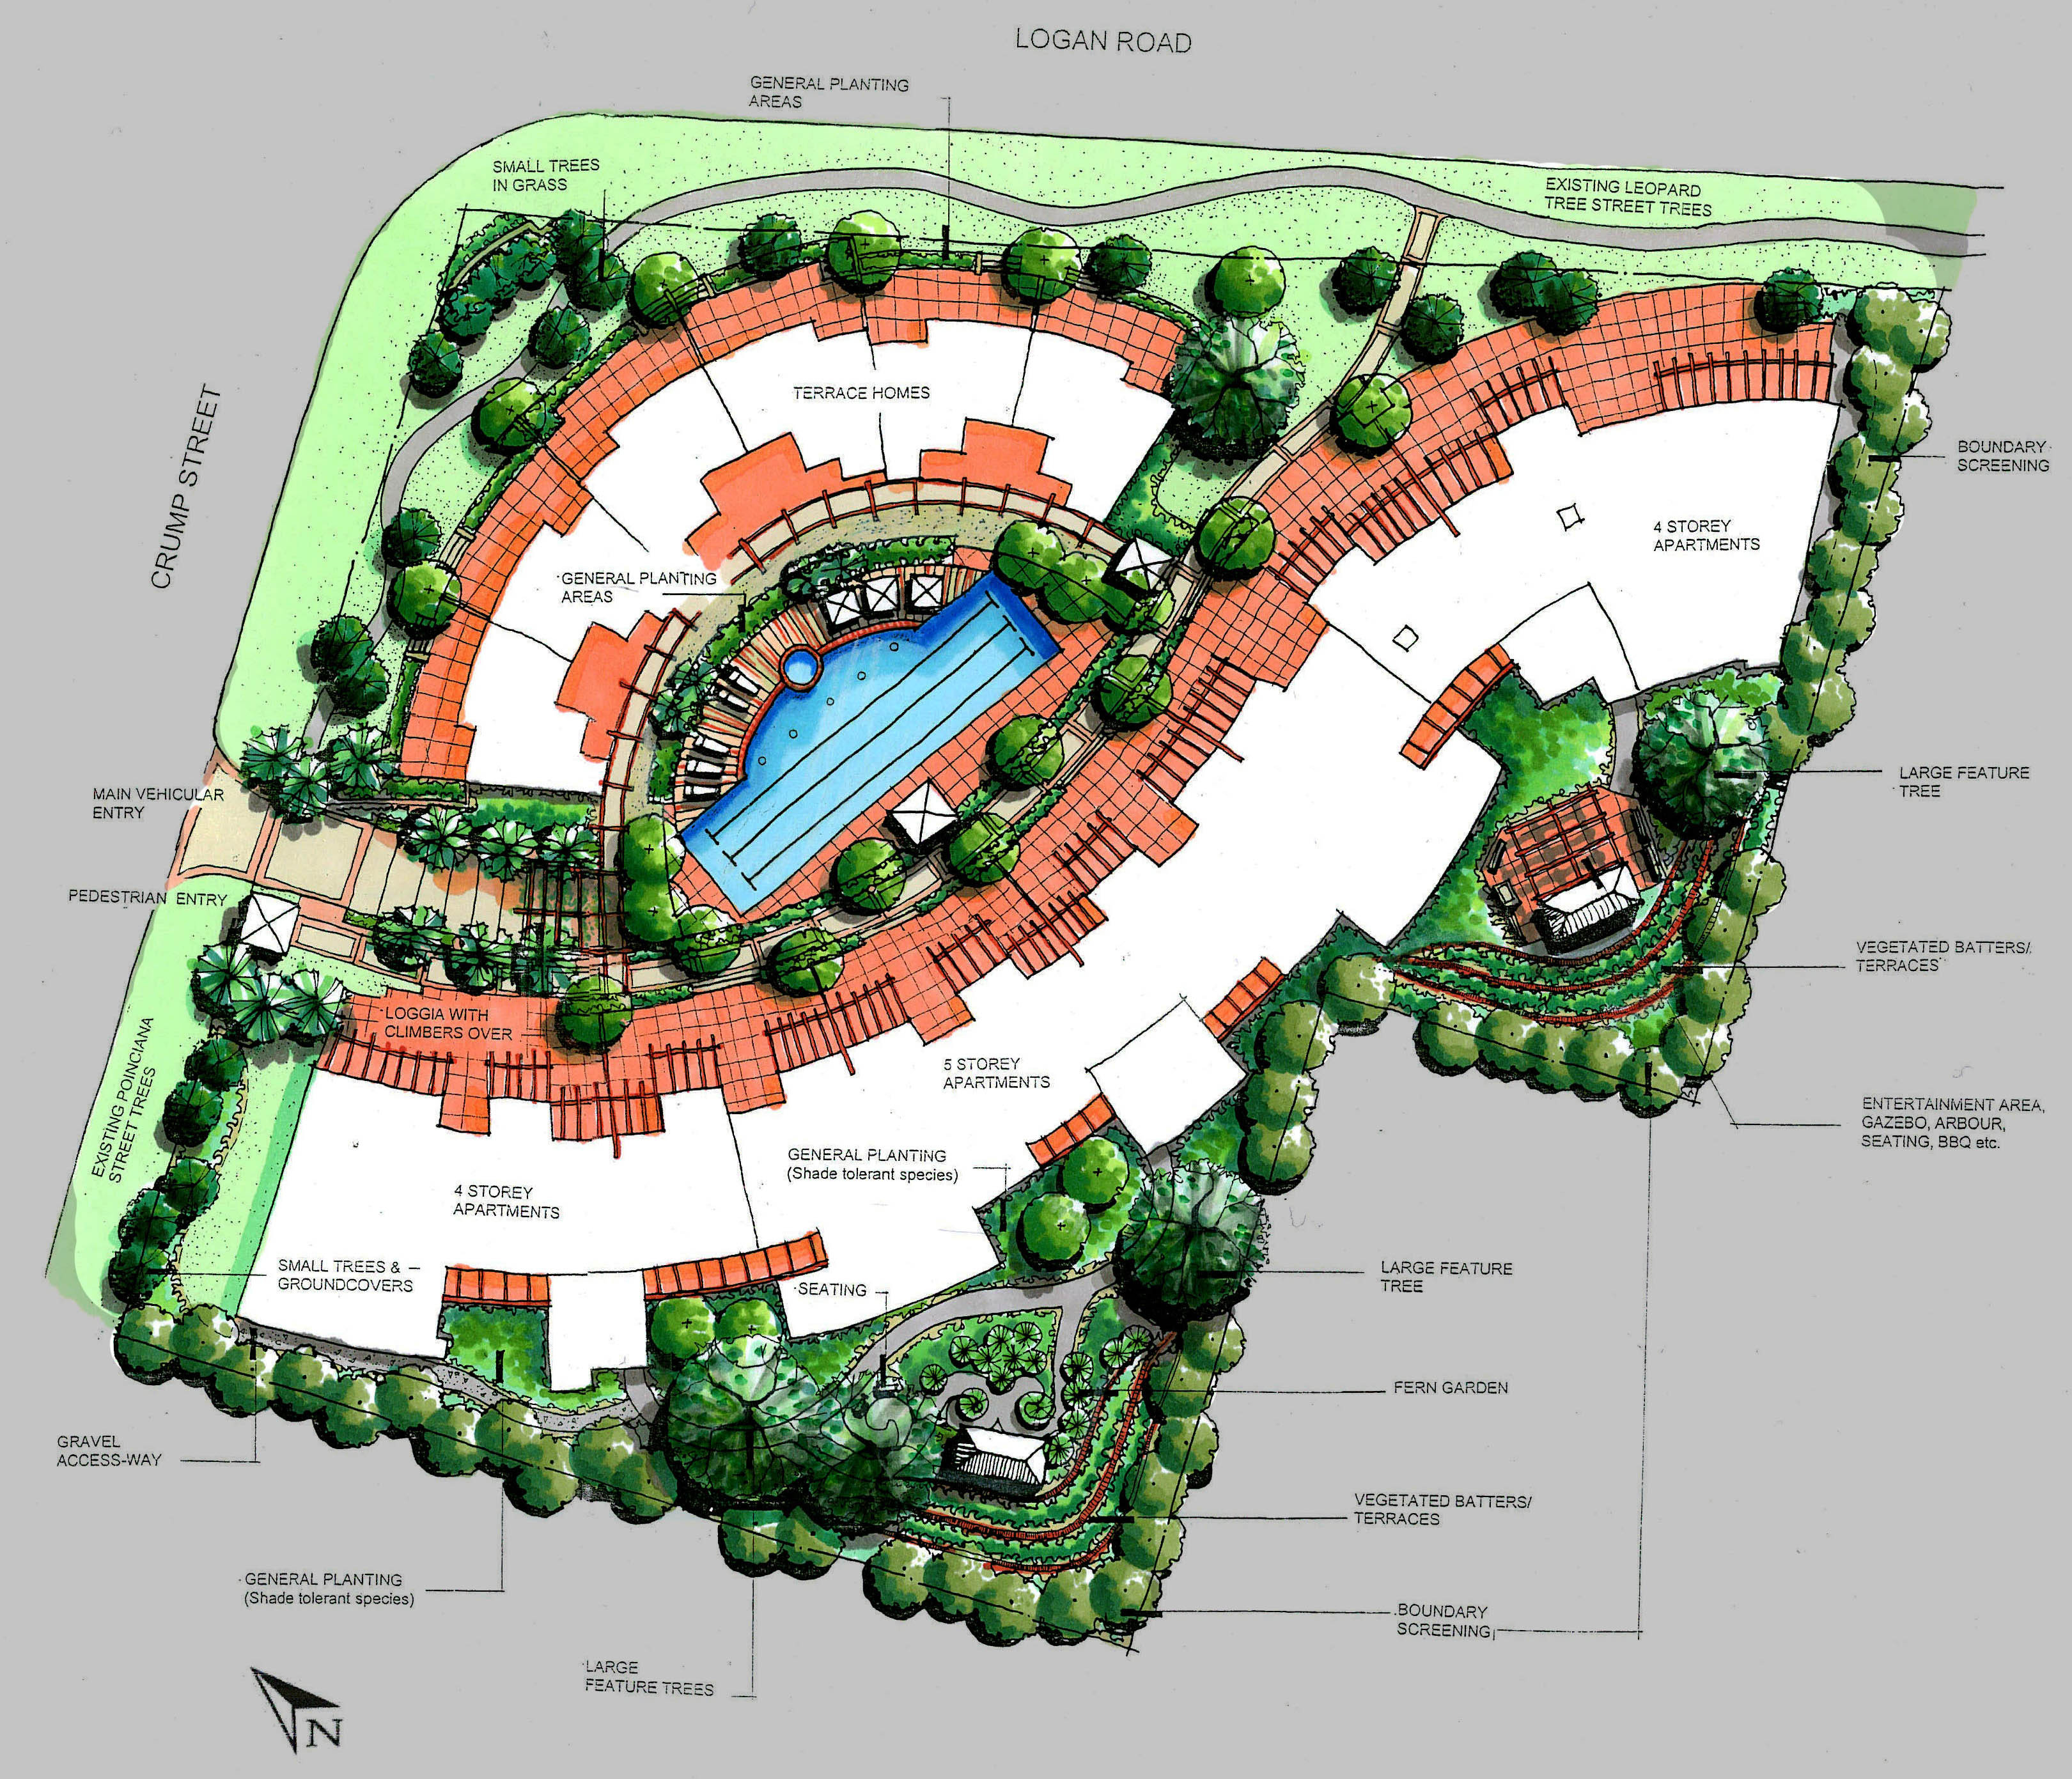 Best ideas about Landscape Design Plans
. Save or Pin Garden Design With Landscape Master Plan Campus Architect Now.